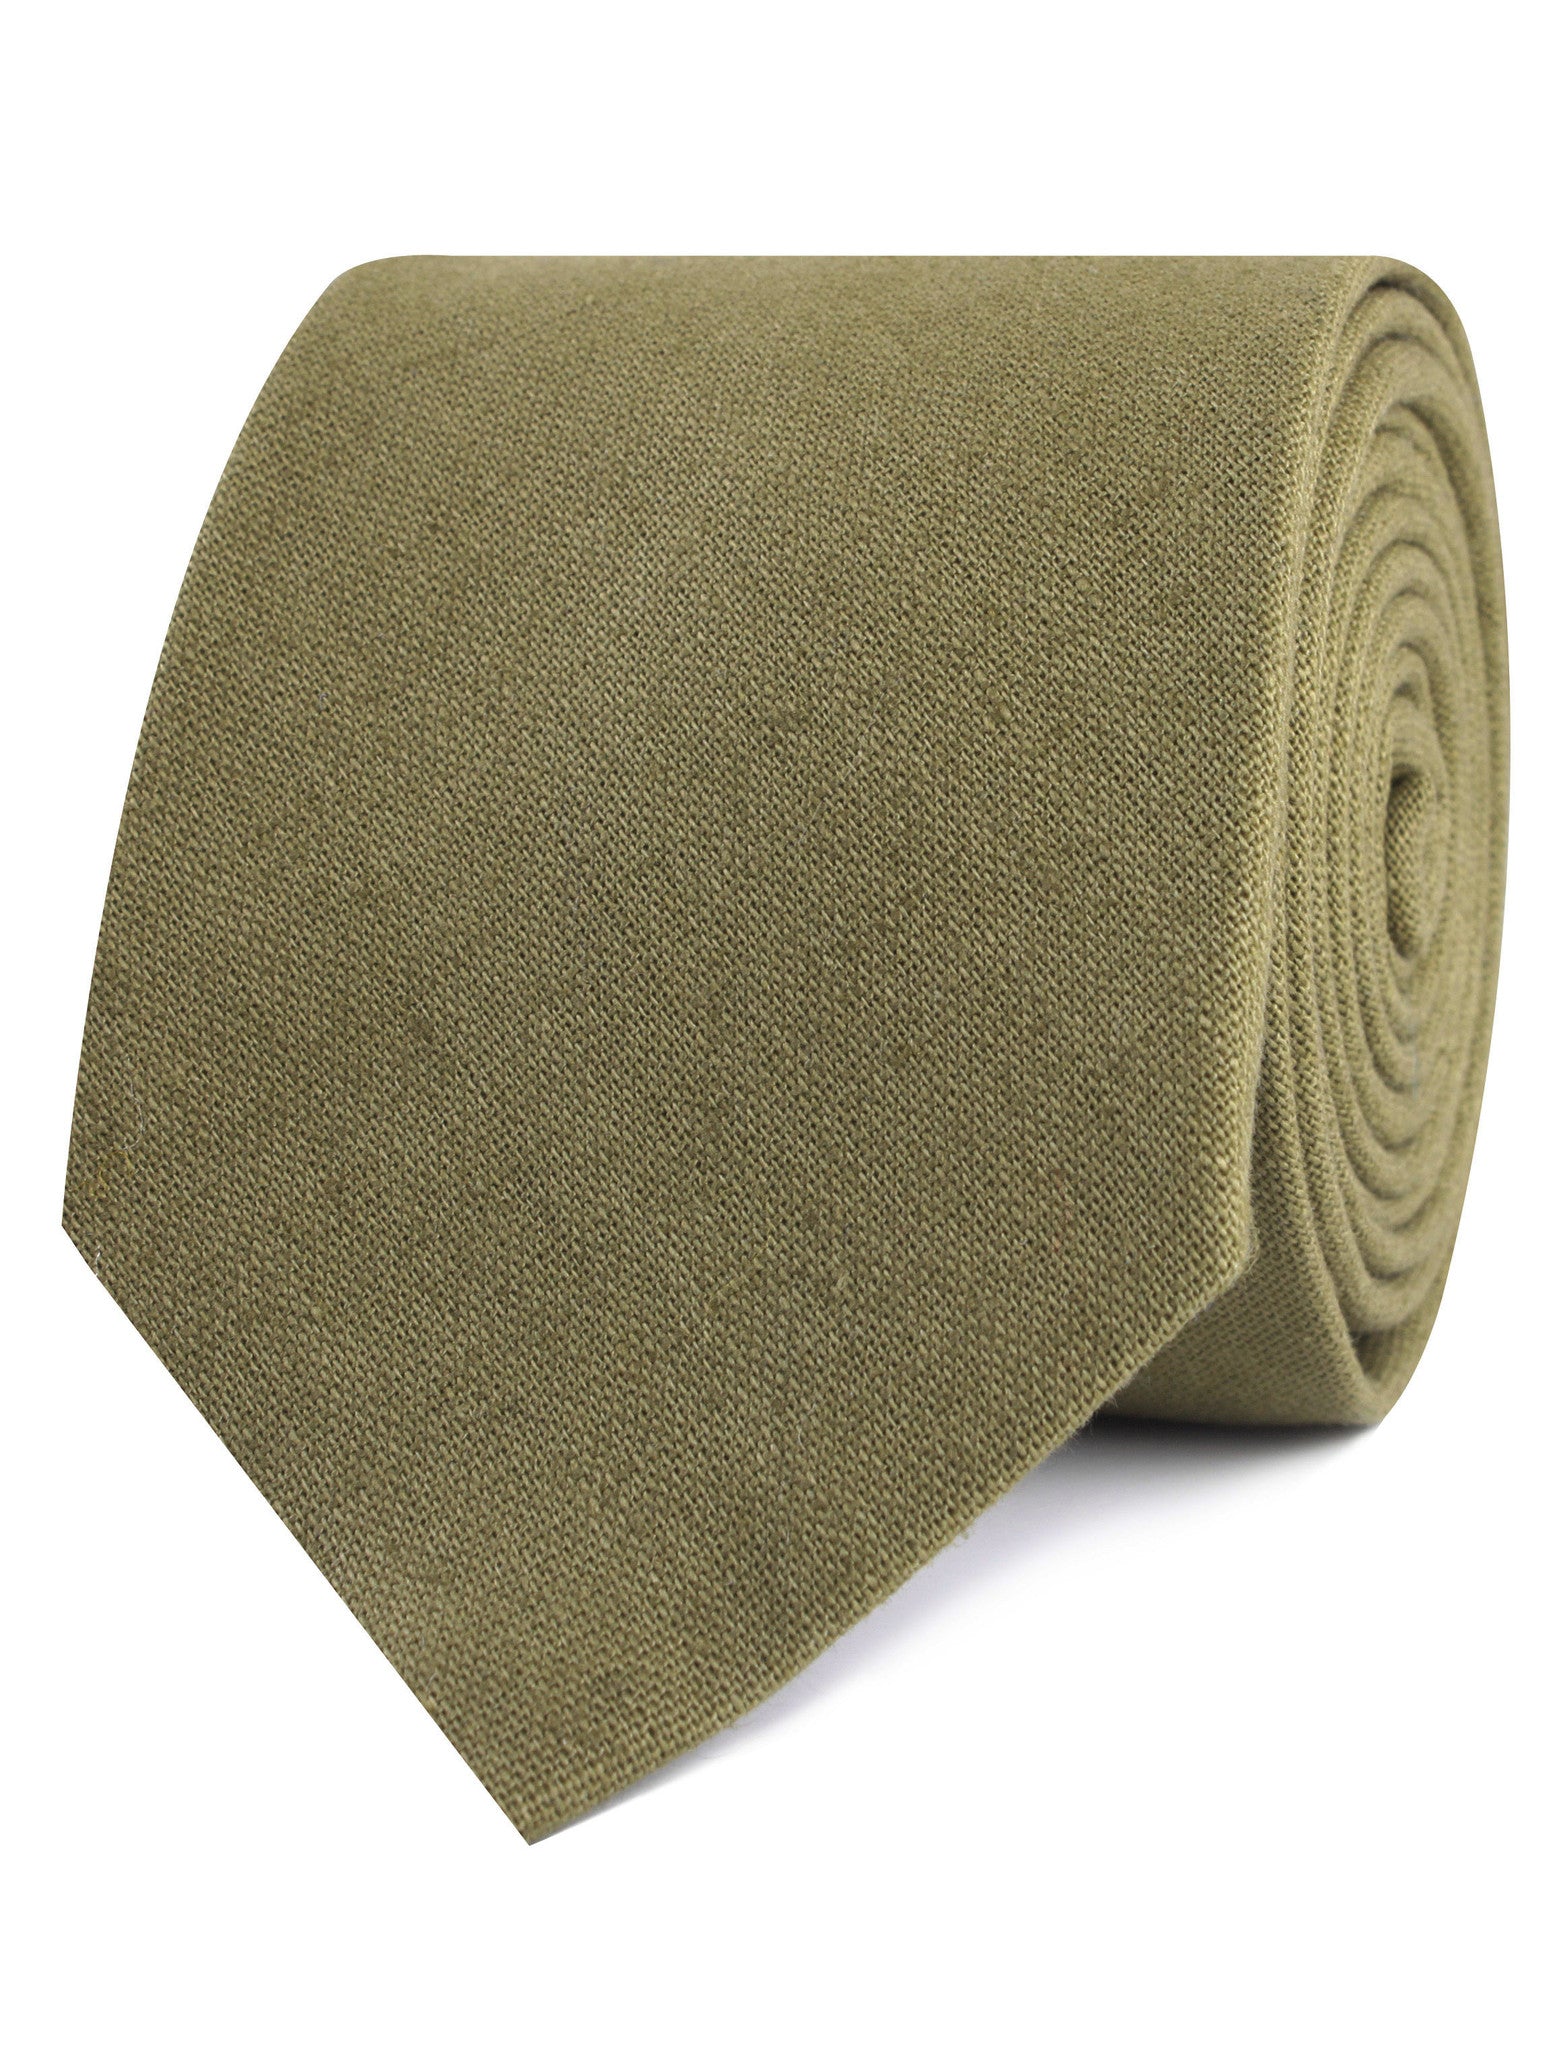 Dry Green Khaki Linen Necktie